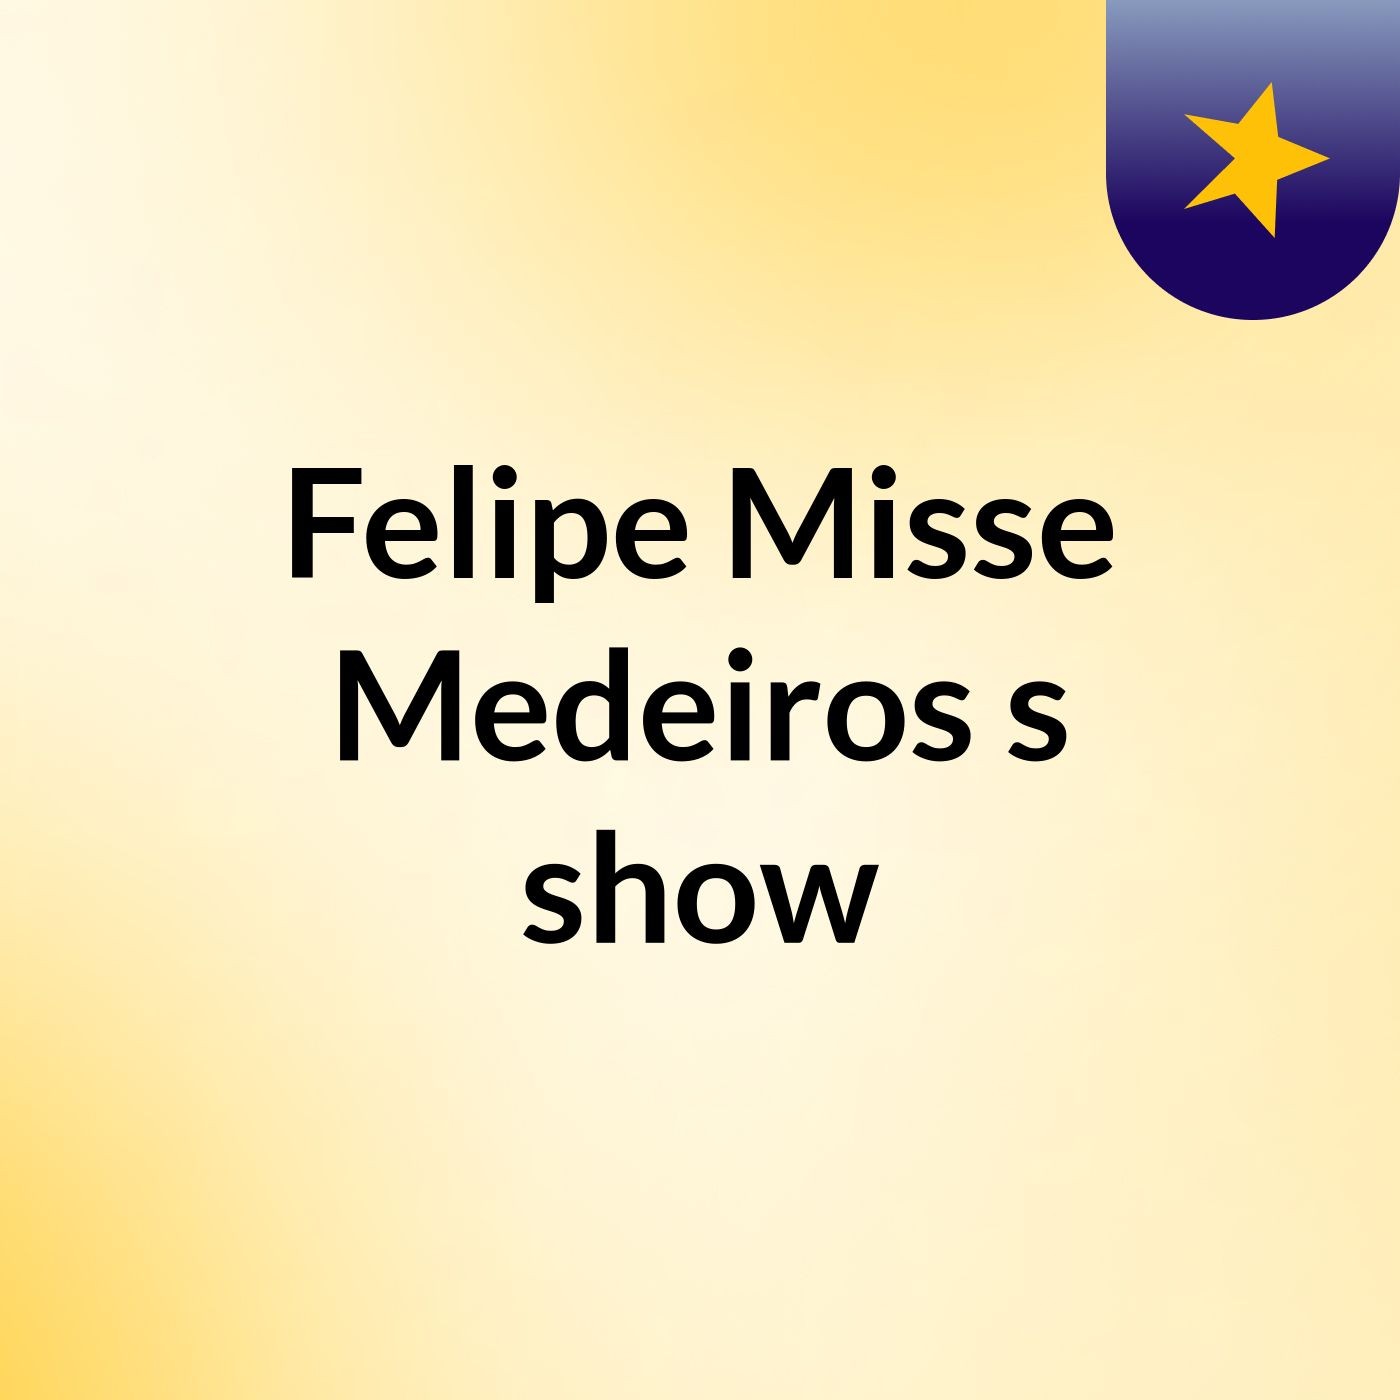 Felipe Misse Medeiros's show